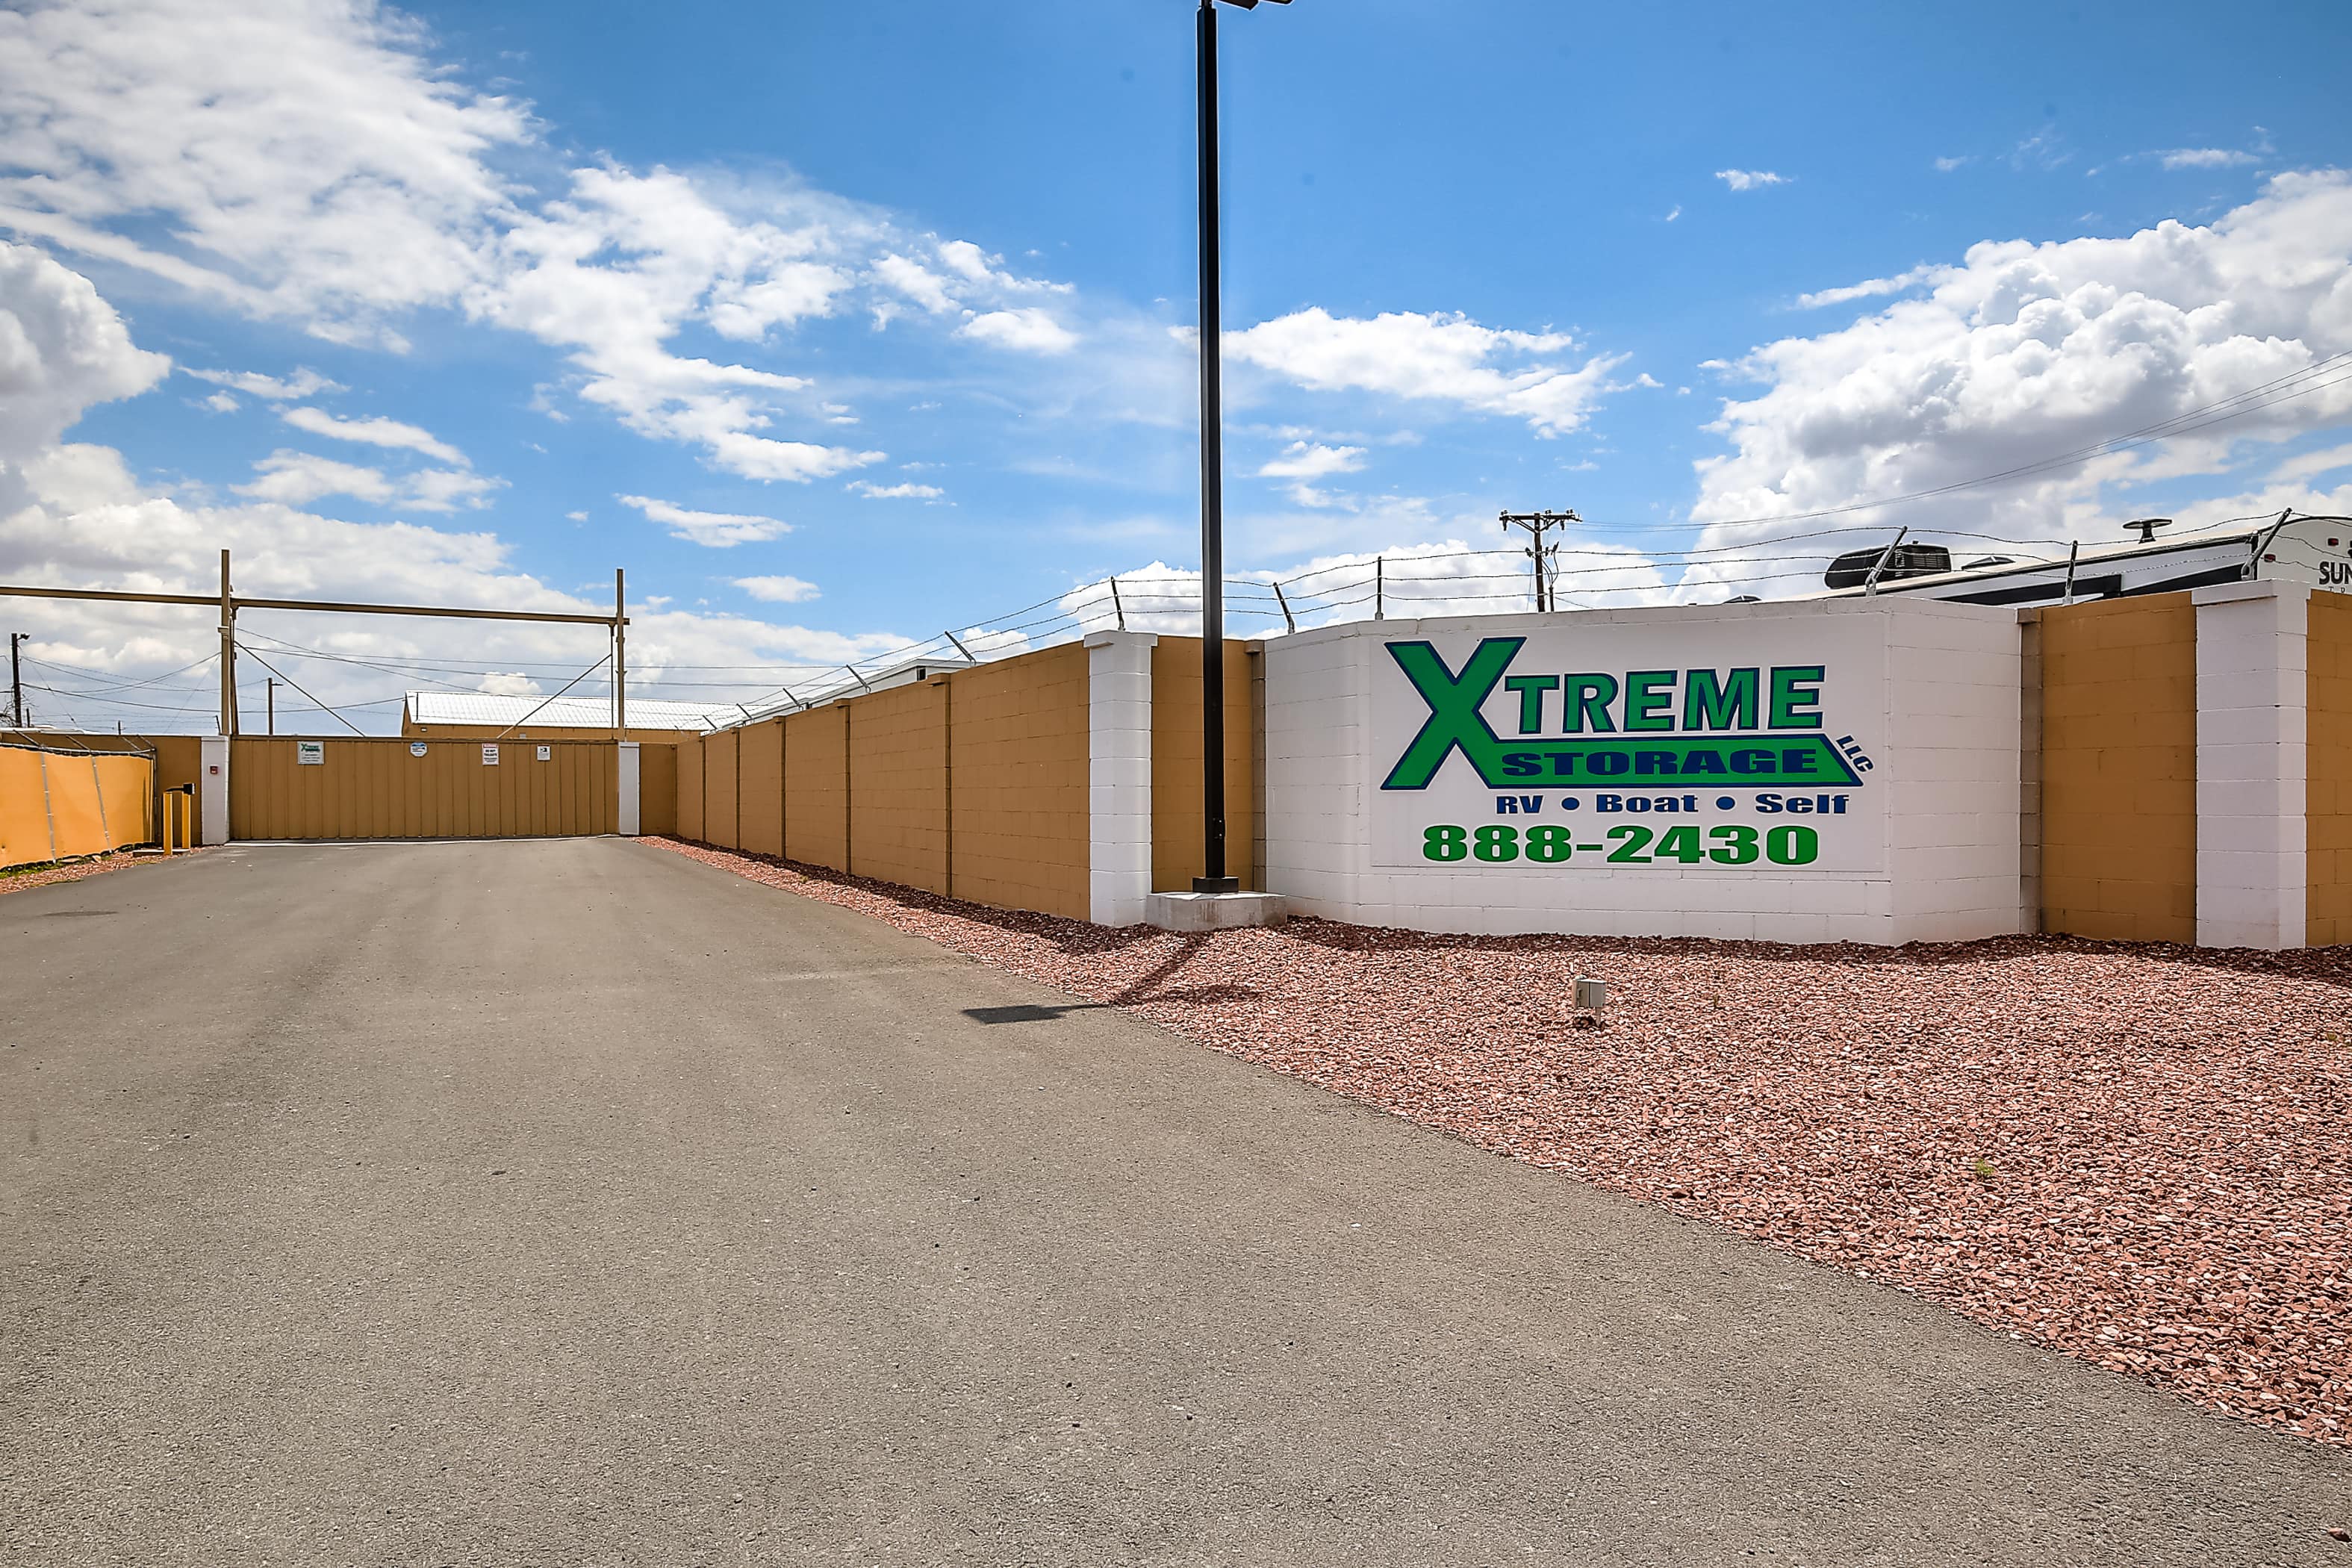 Xtreme Storage Albuquerque, US, storage facilities for sale